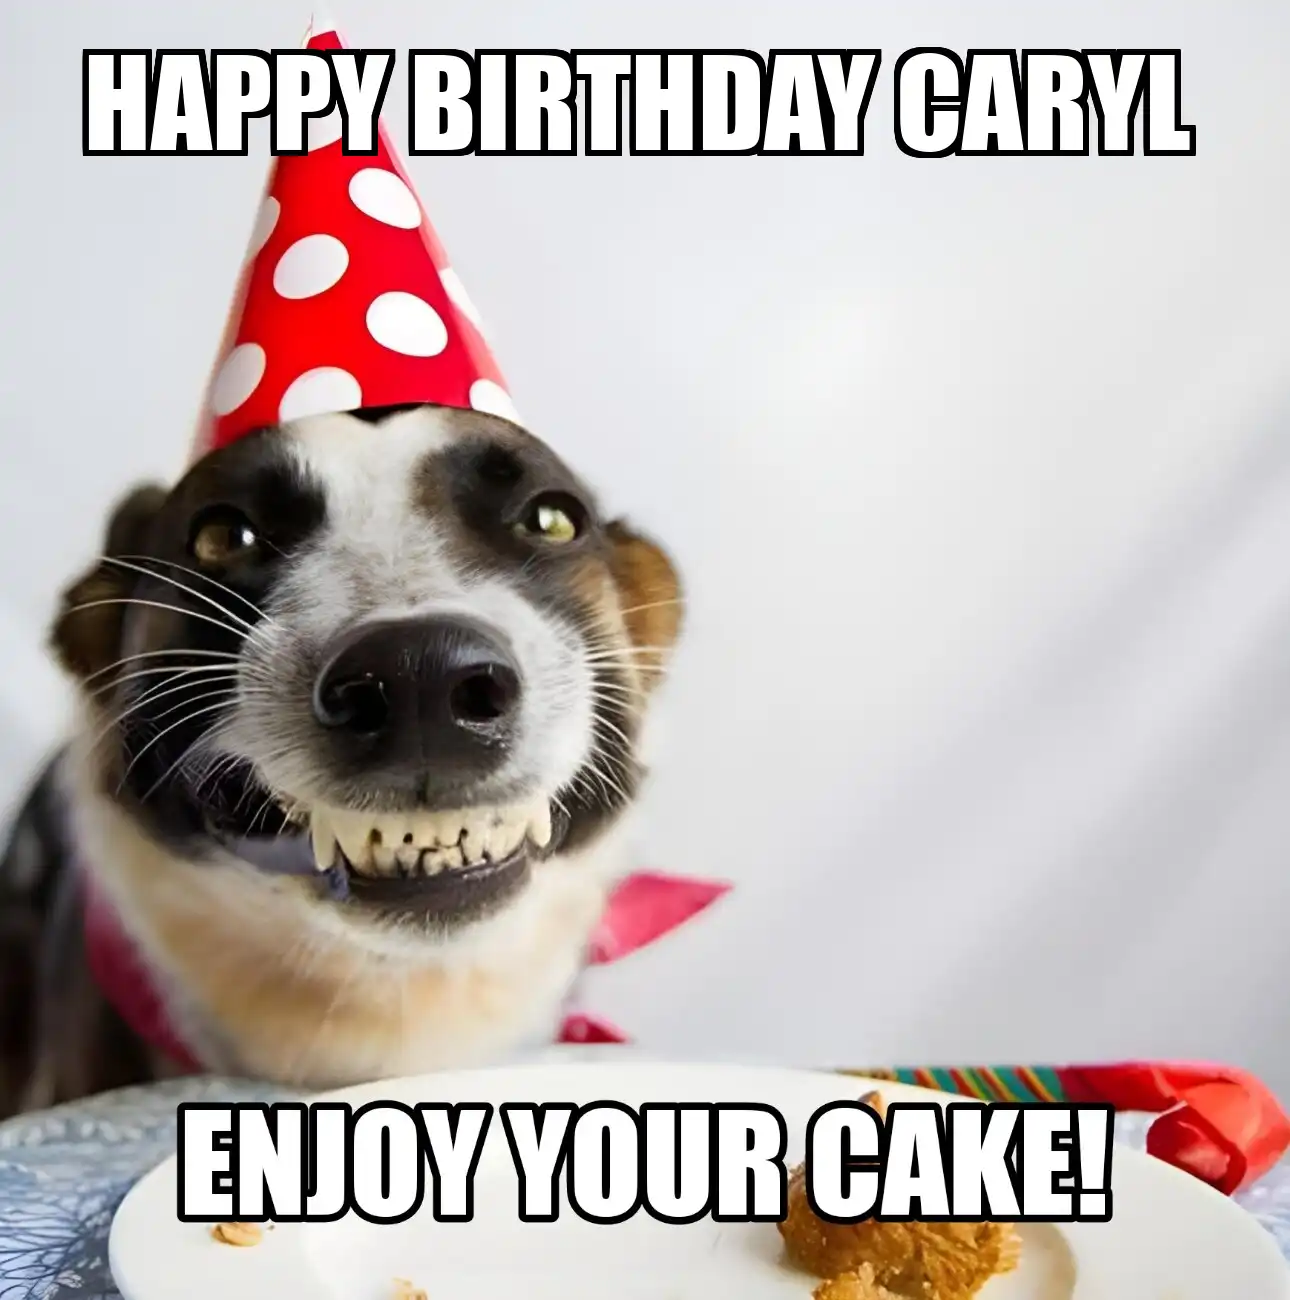 Happy Birthday Caryl Enjoy Your Cake Dog Meme